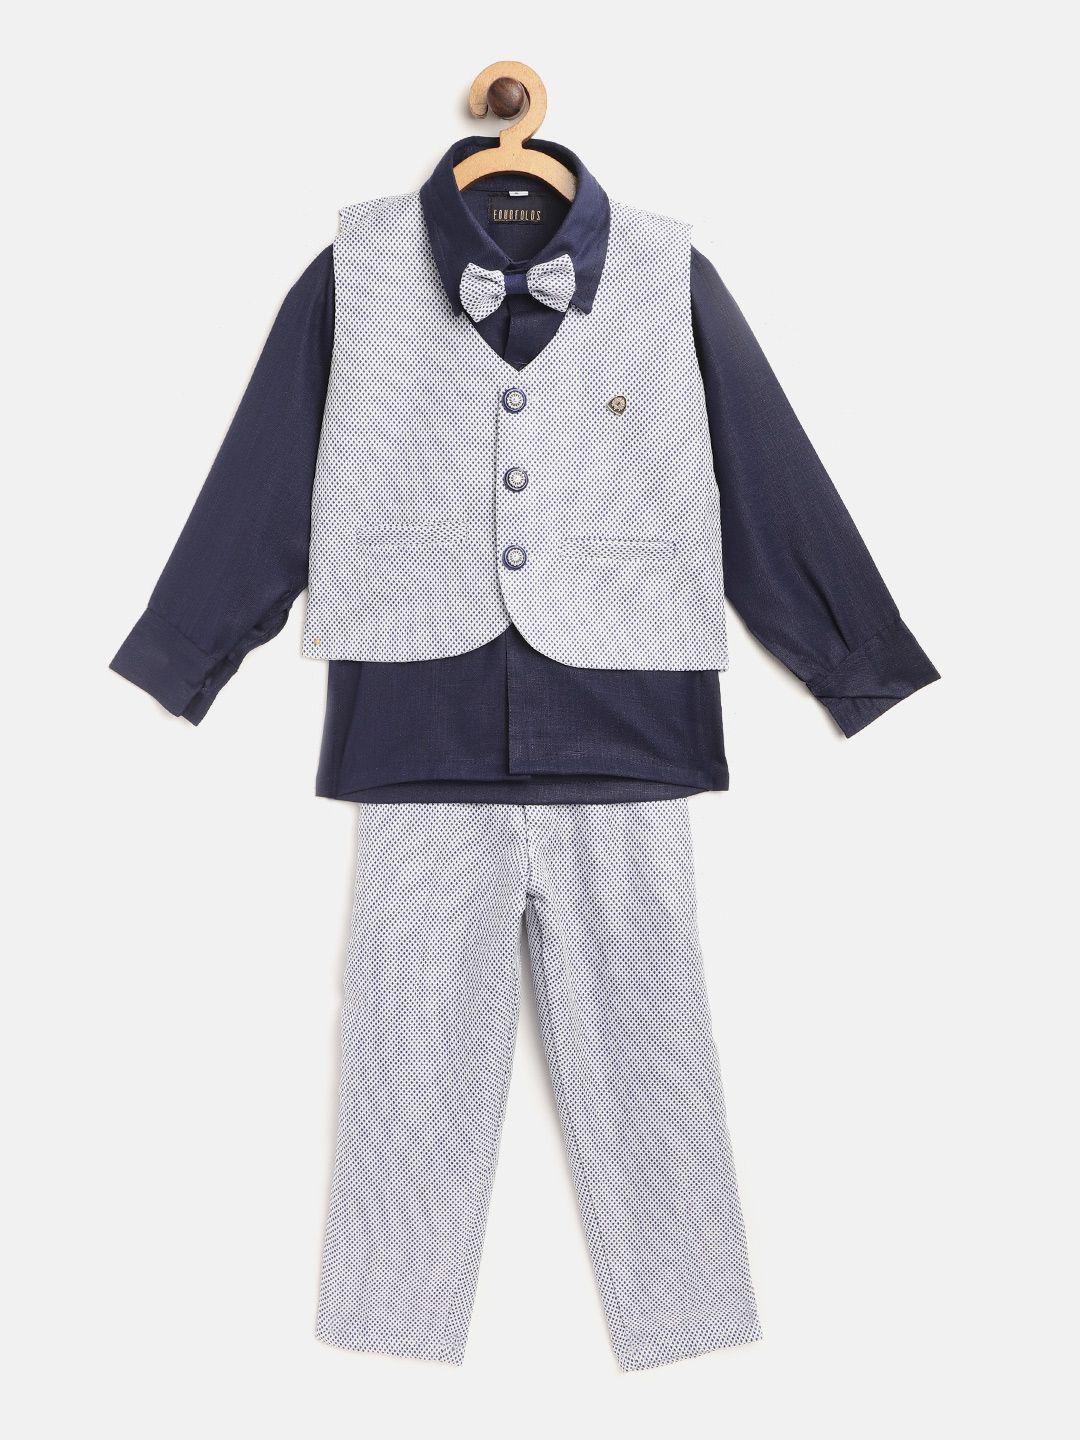 fourfolds boys navy blue & white self design clothing set with bow tie